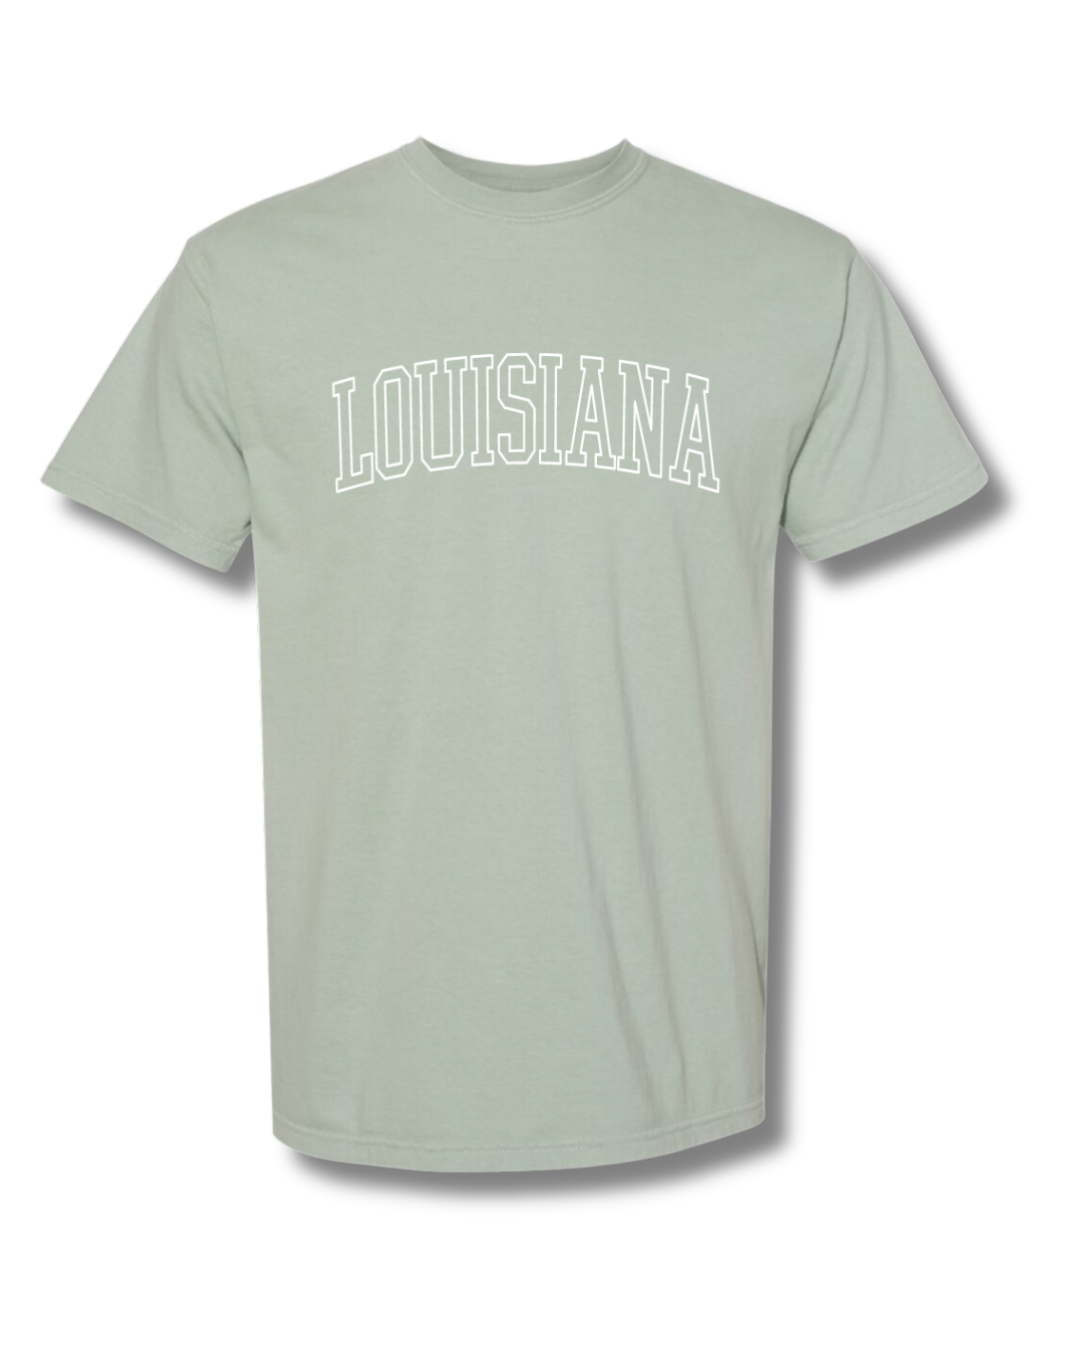 Rep Your Louisiana Custom Comfort: Louisiana Prep